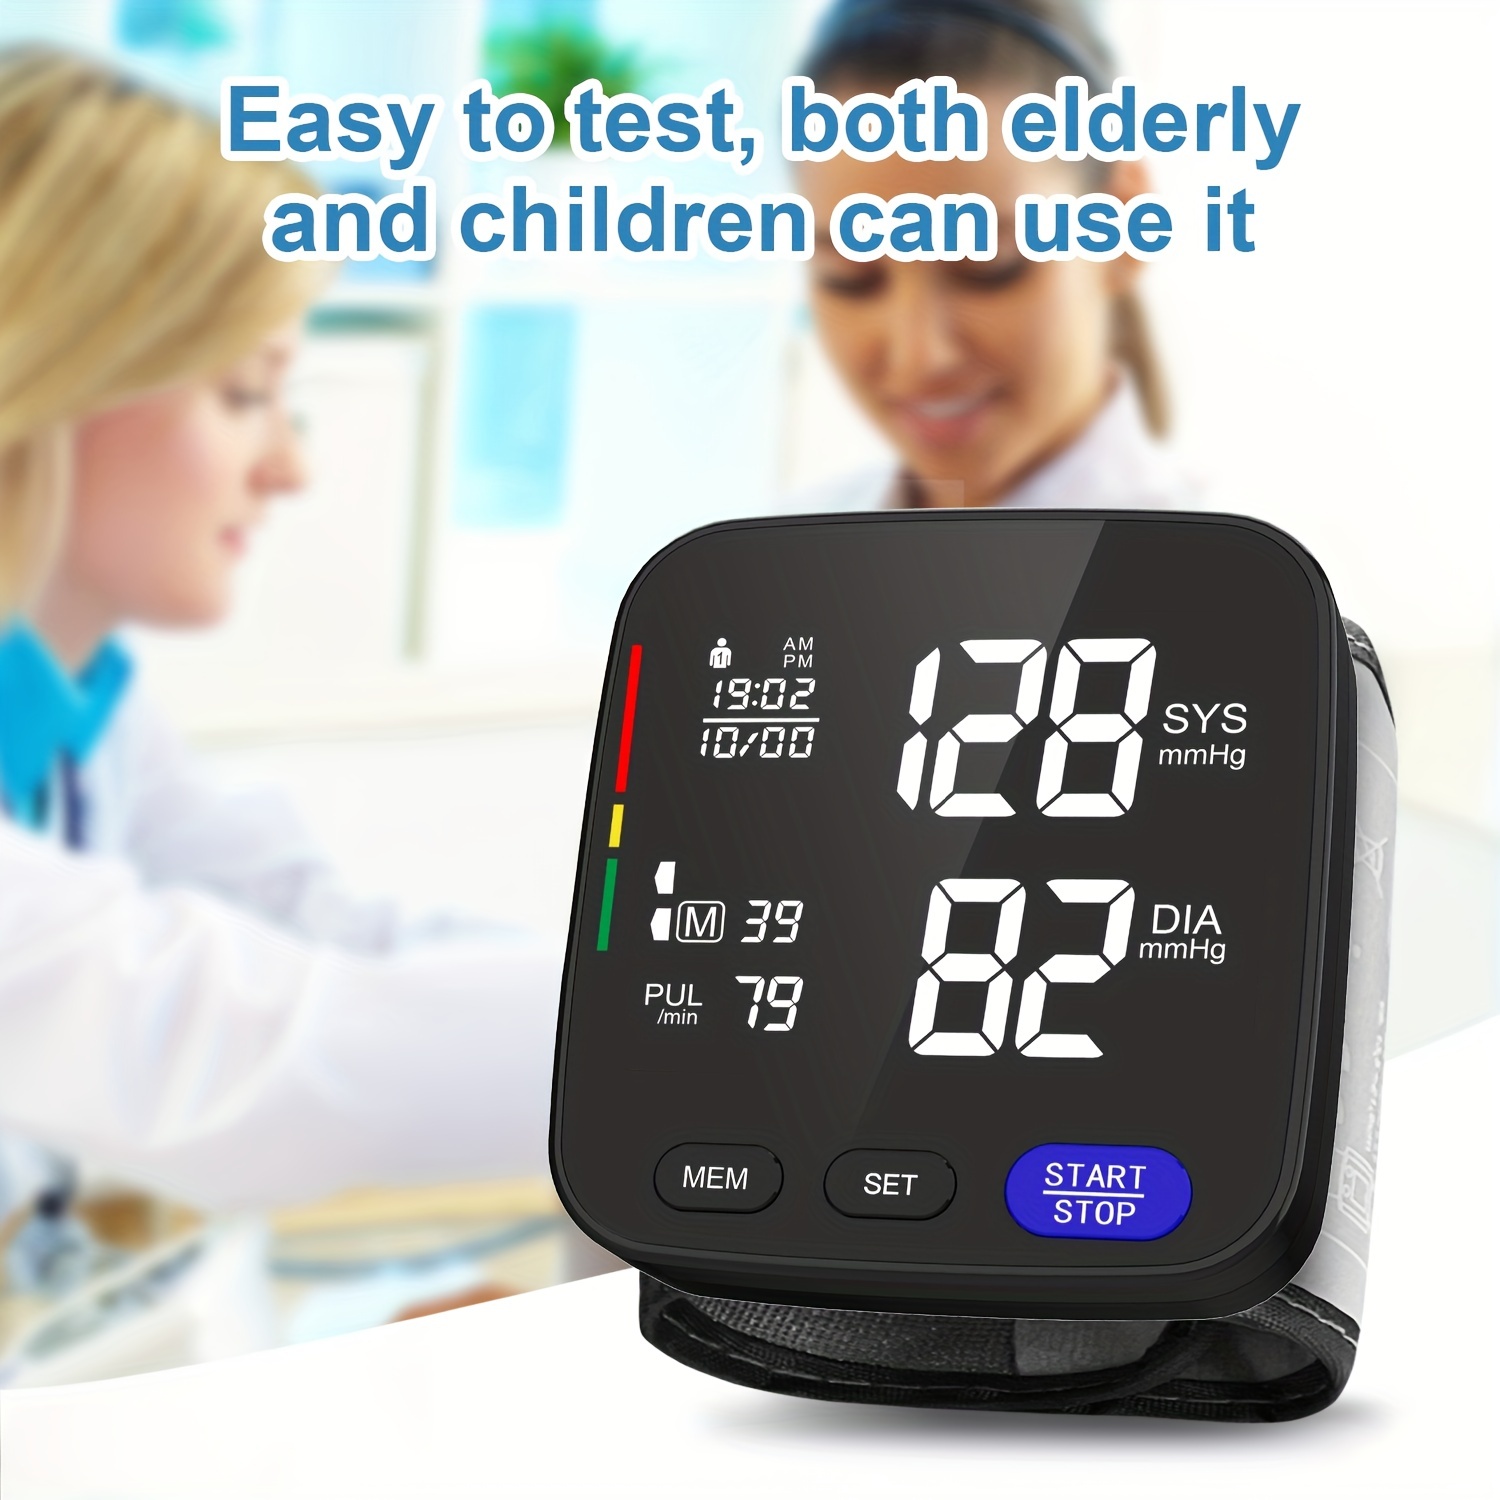 Blood pressure monitor for children - fast delivery - easy handling